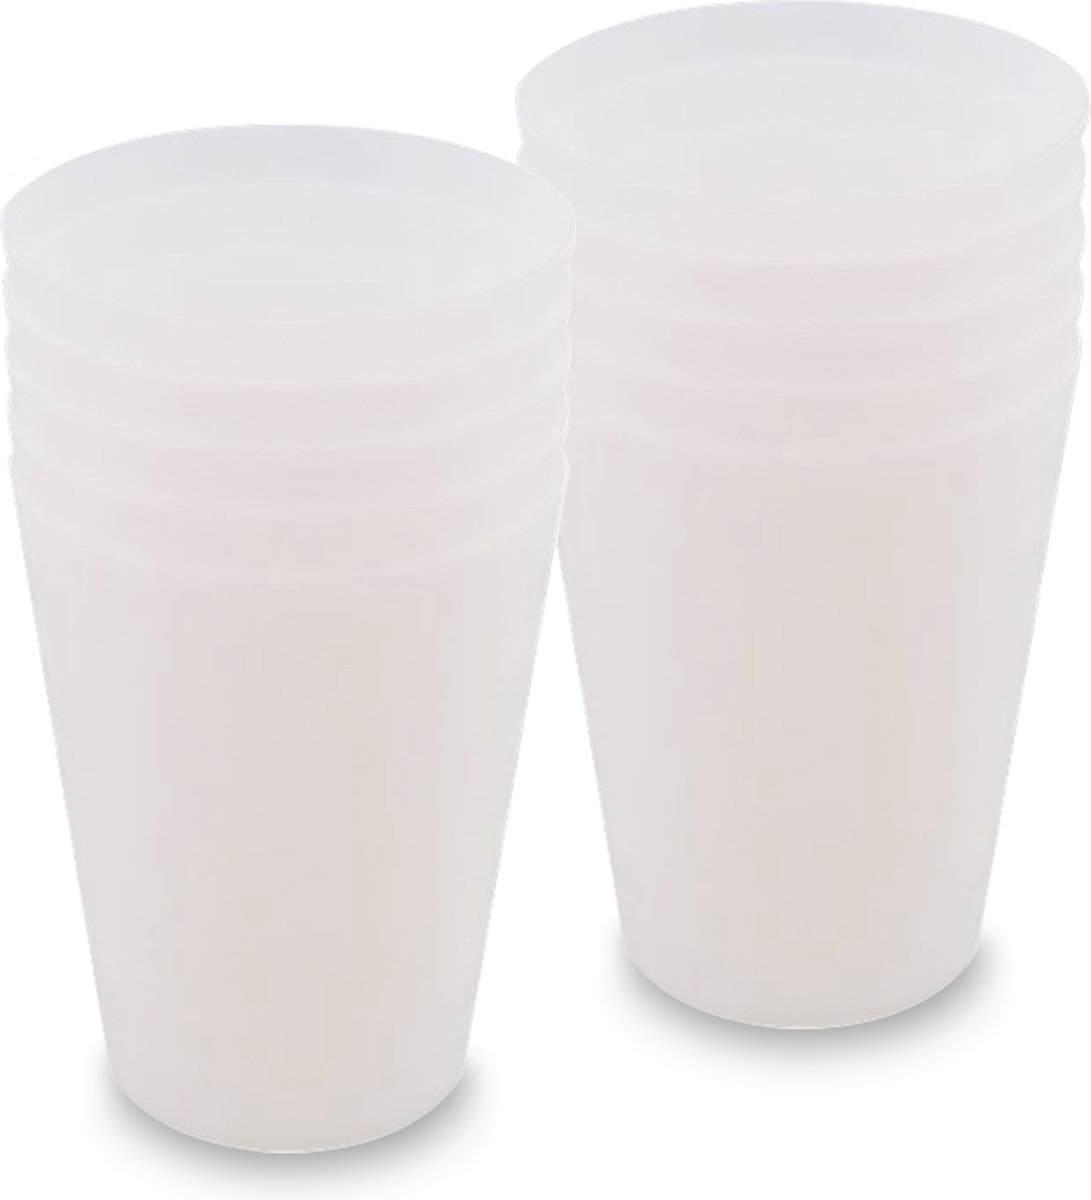 In Round Herbruikbare Plastic Drink bekers – 10 Stuks – Wit